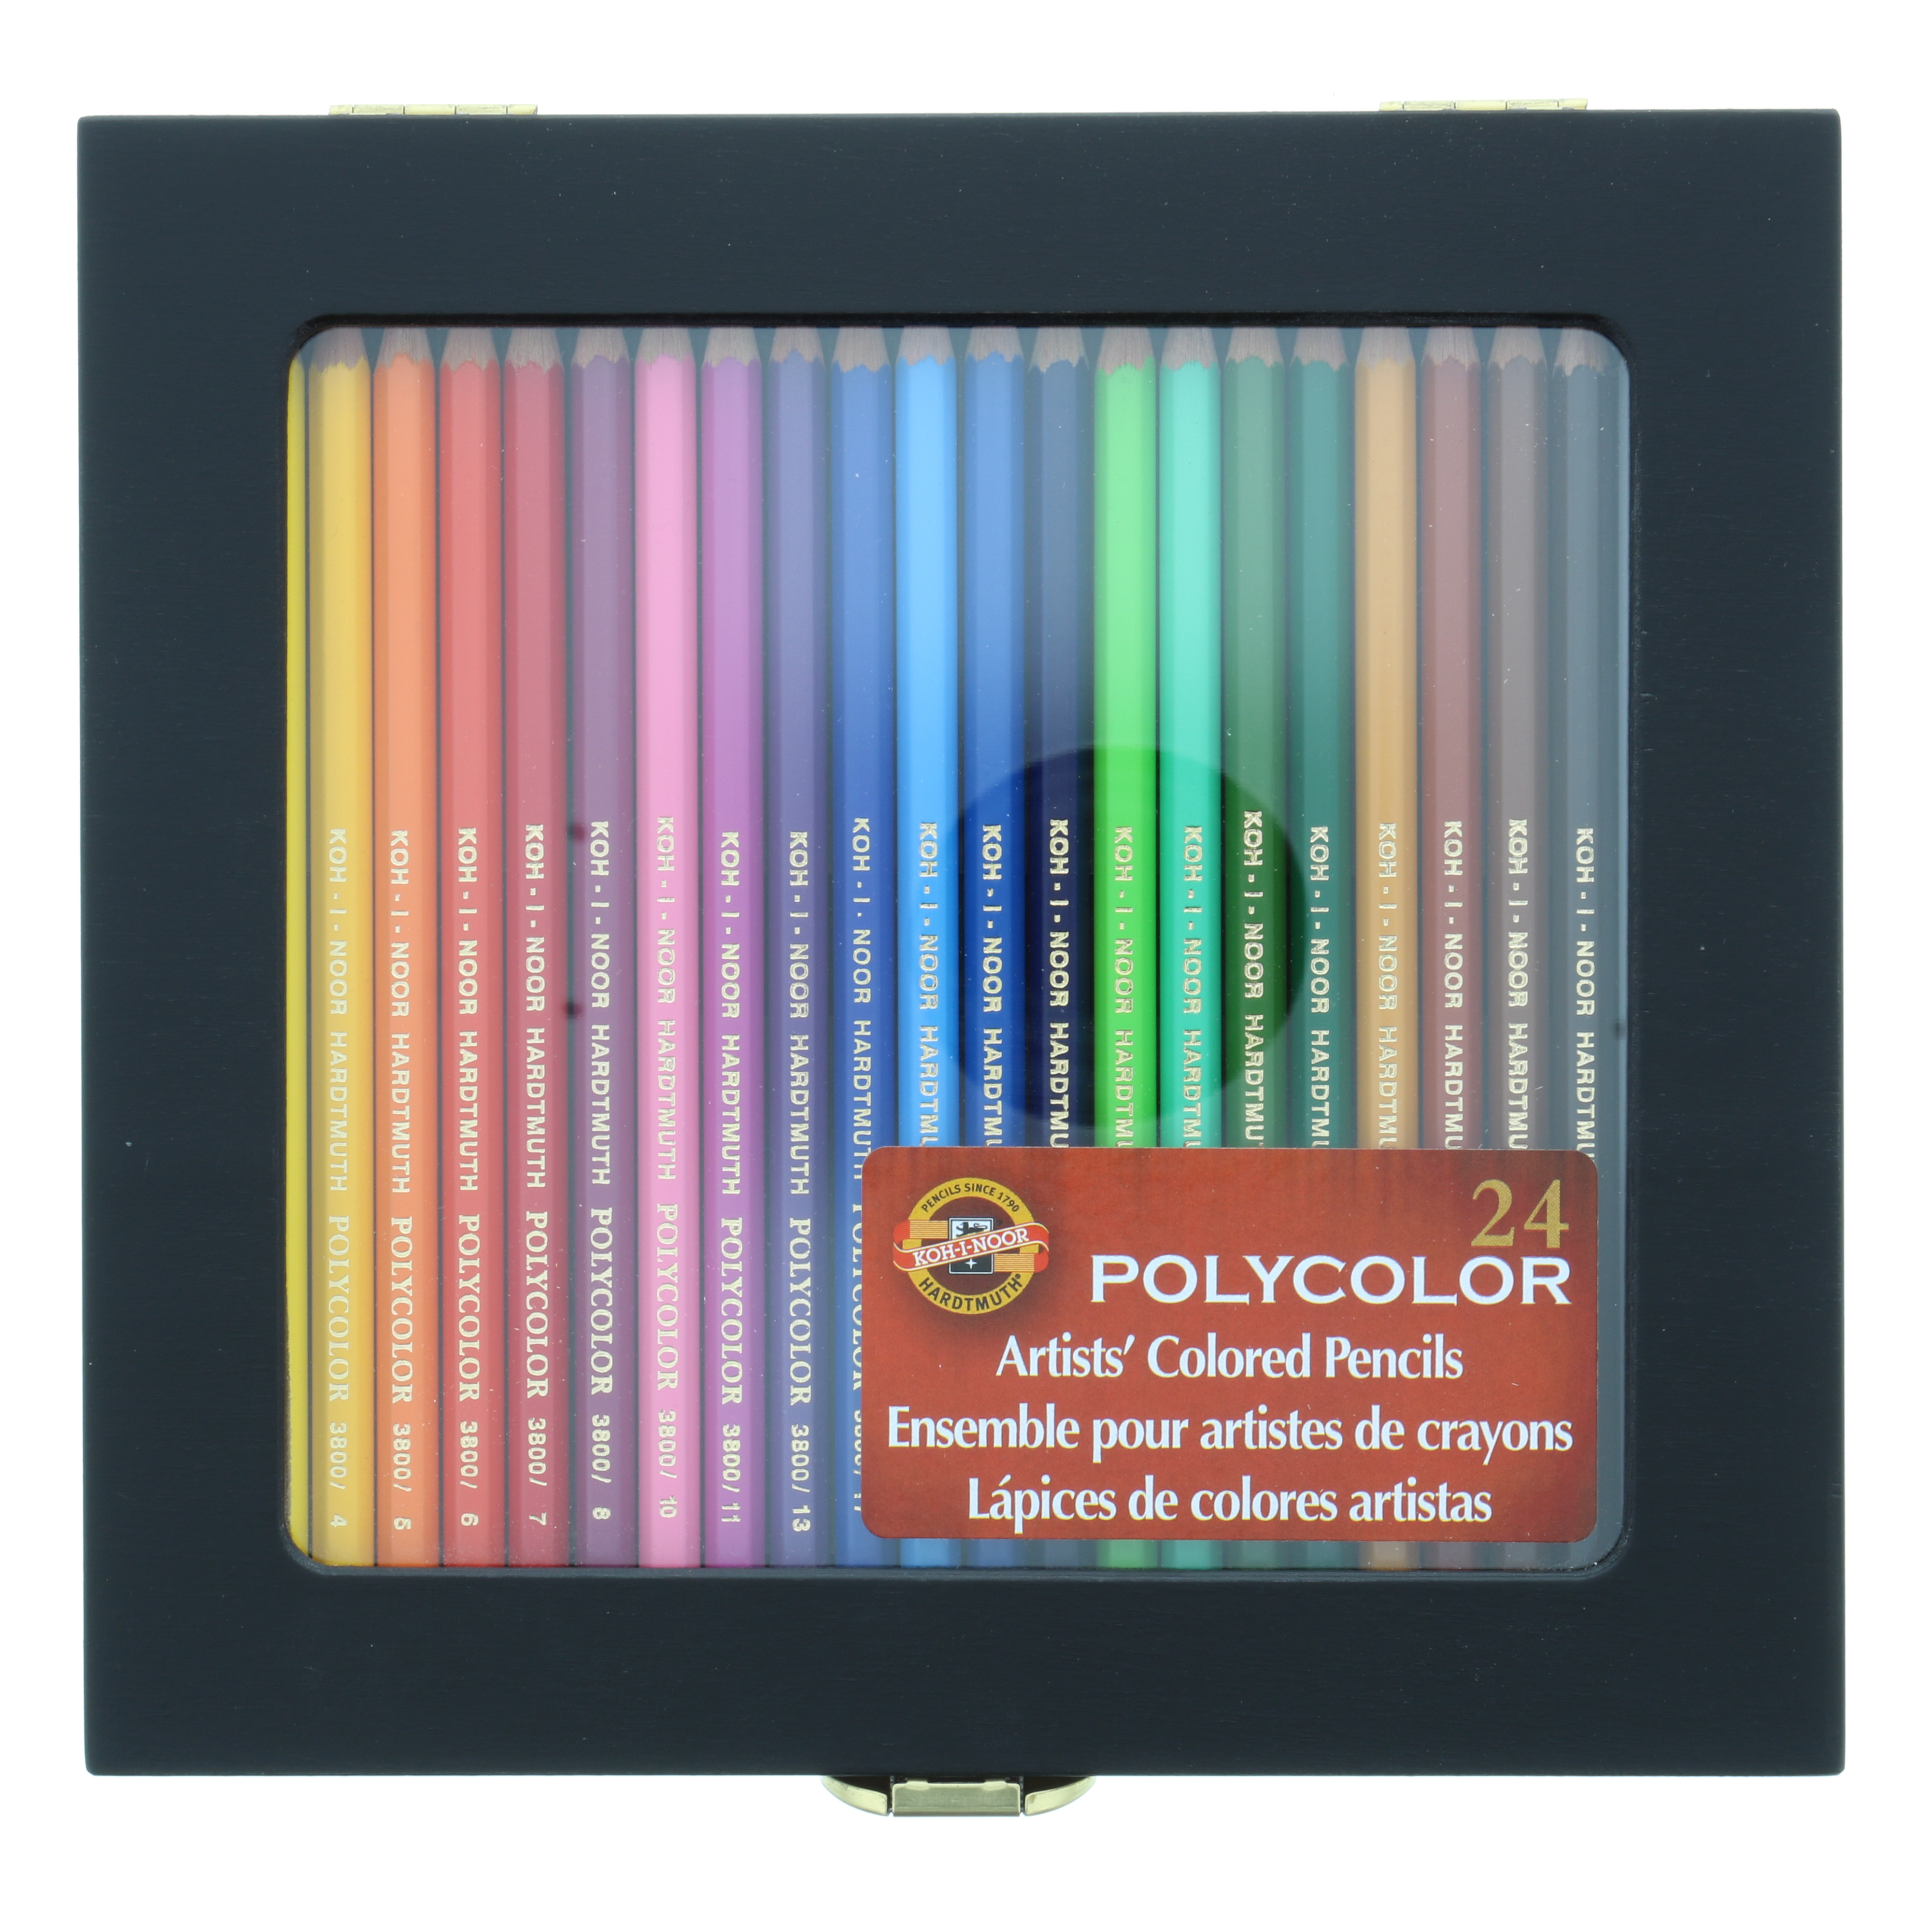 Koh-I-Noor Polycolor Artists' Colored Pencil Set in Wooden Box, 24-Pencils